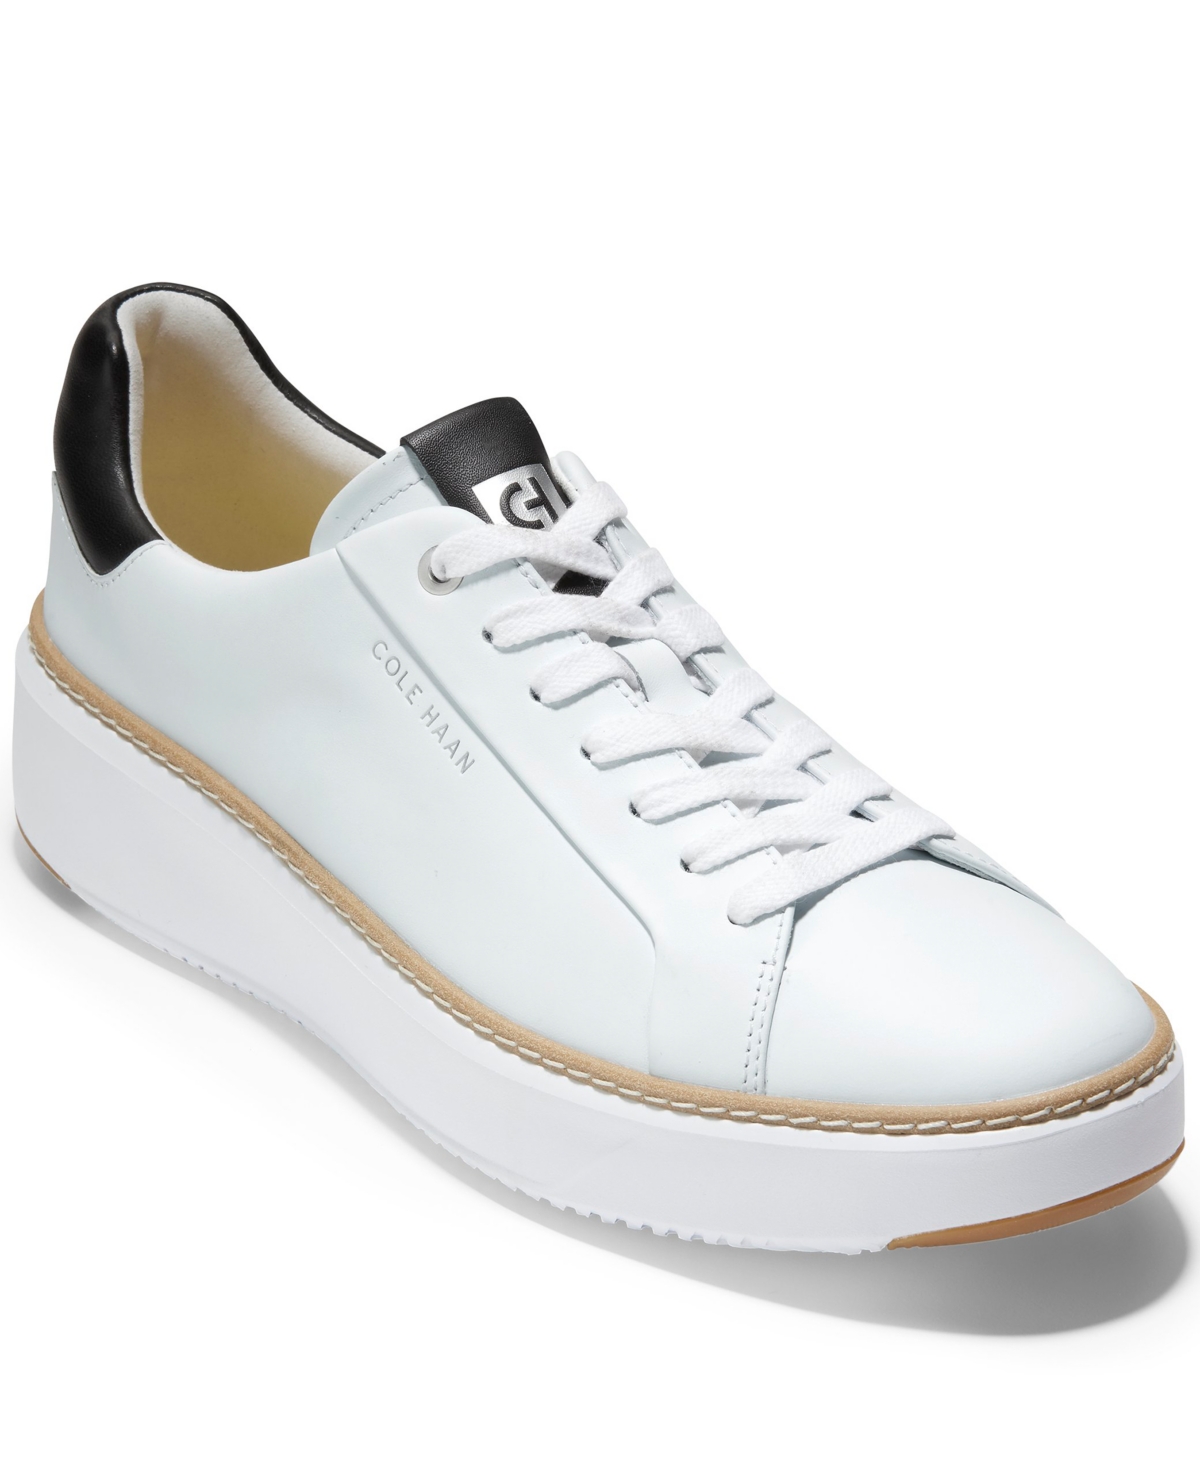 Women's Grandpro Topspin Sneakers - White Dove